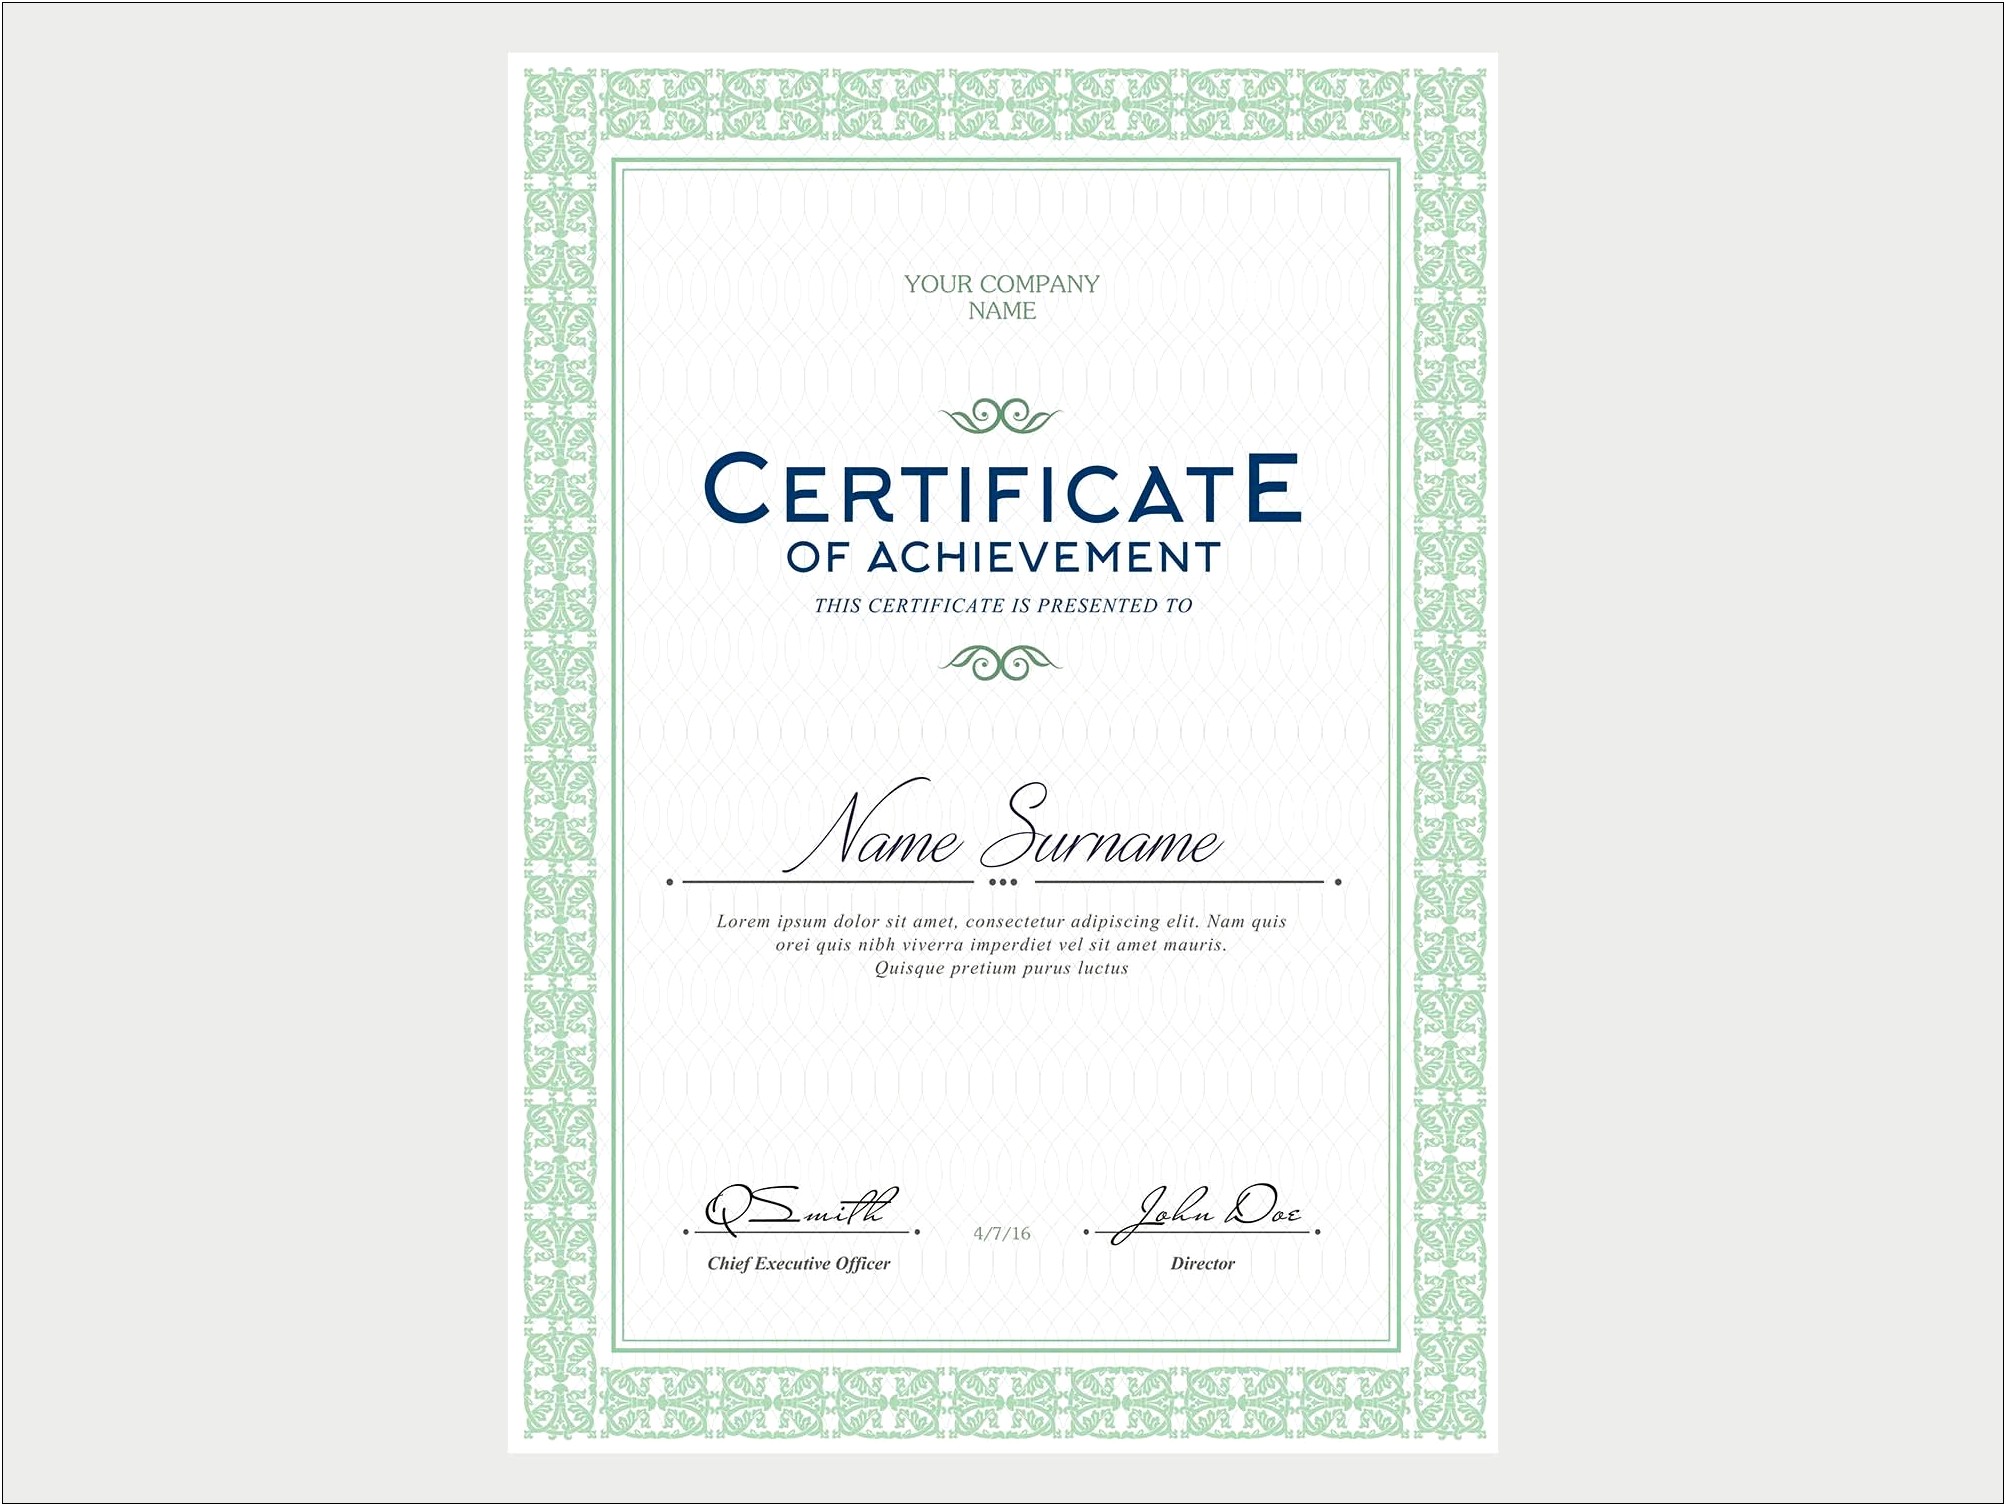 certificate-of-appreciation-template-free-psd-templates-resume-designs-9xvlwya1o7